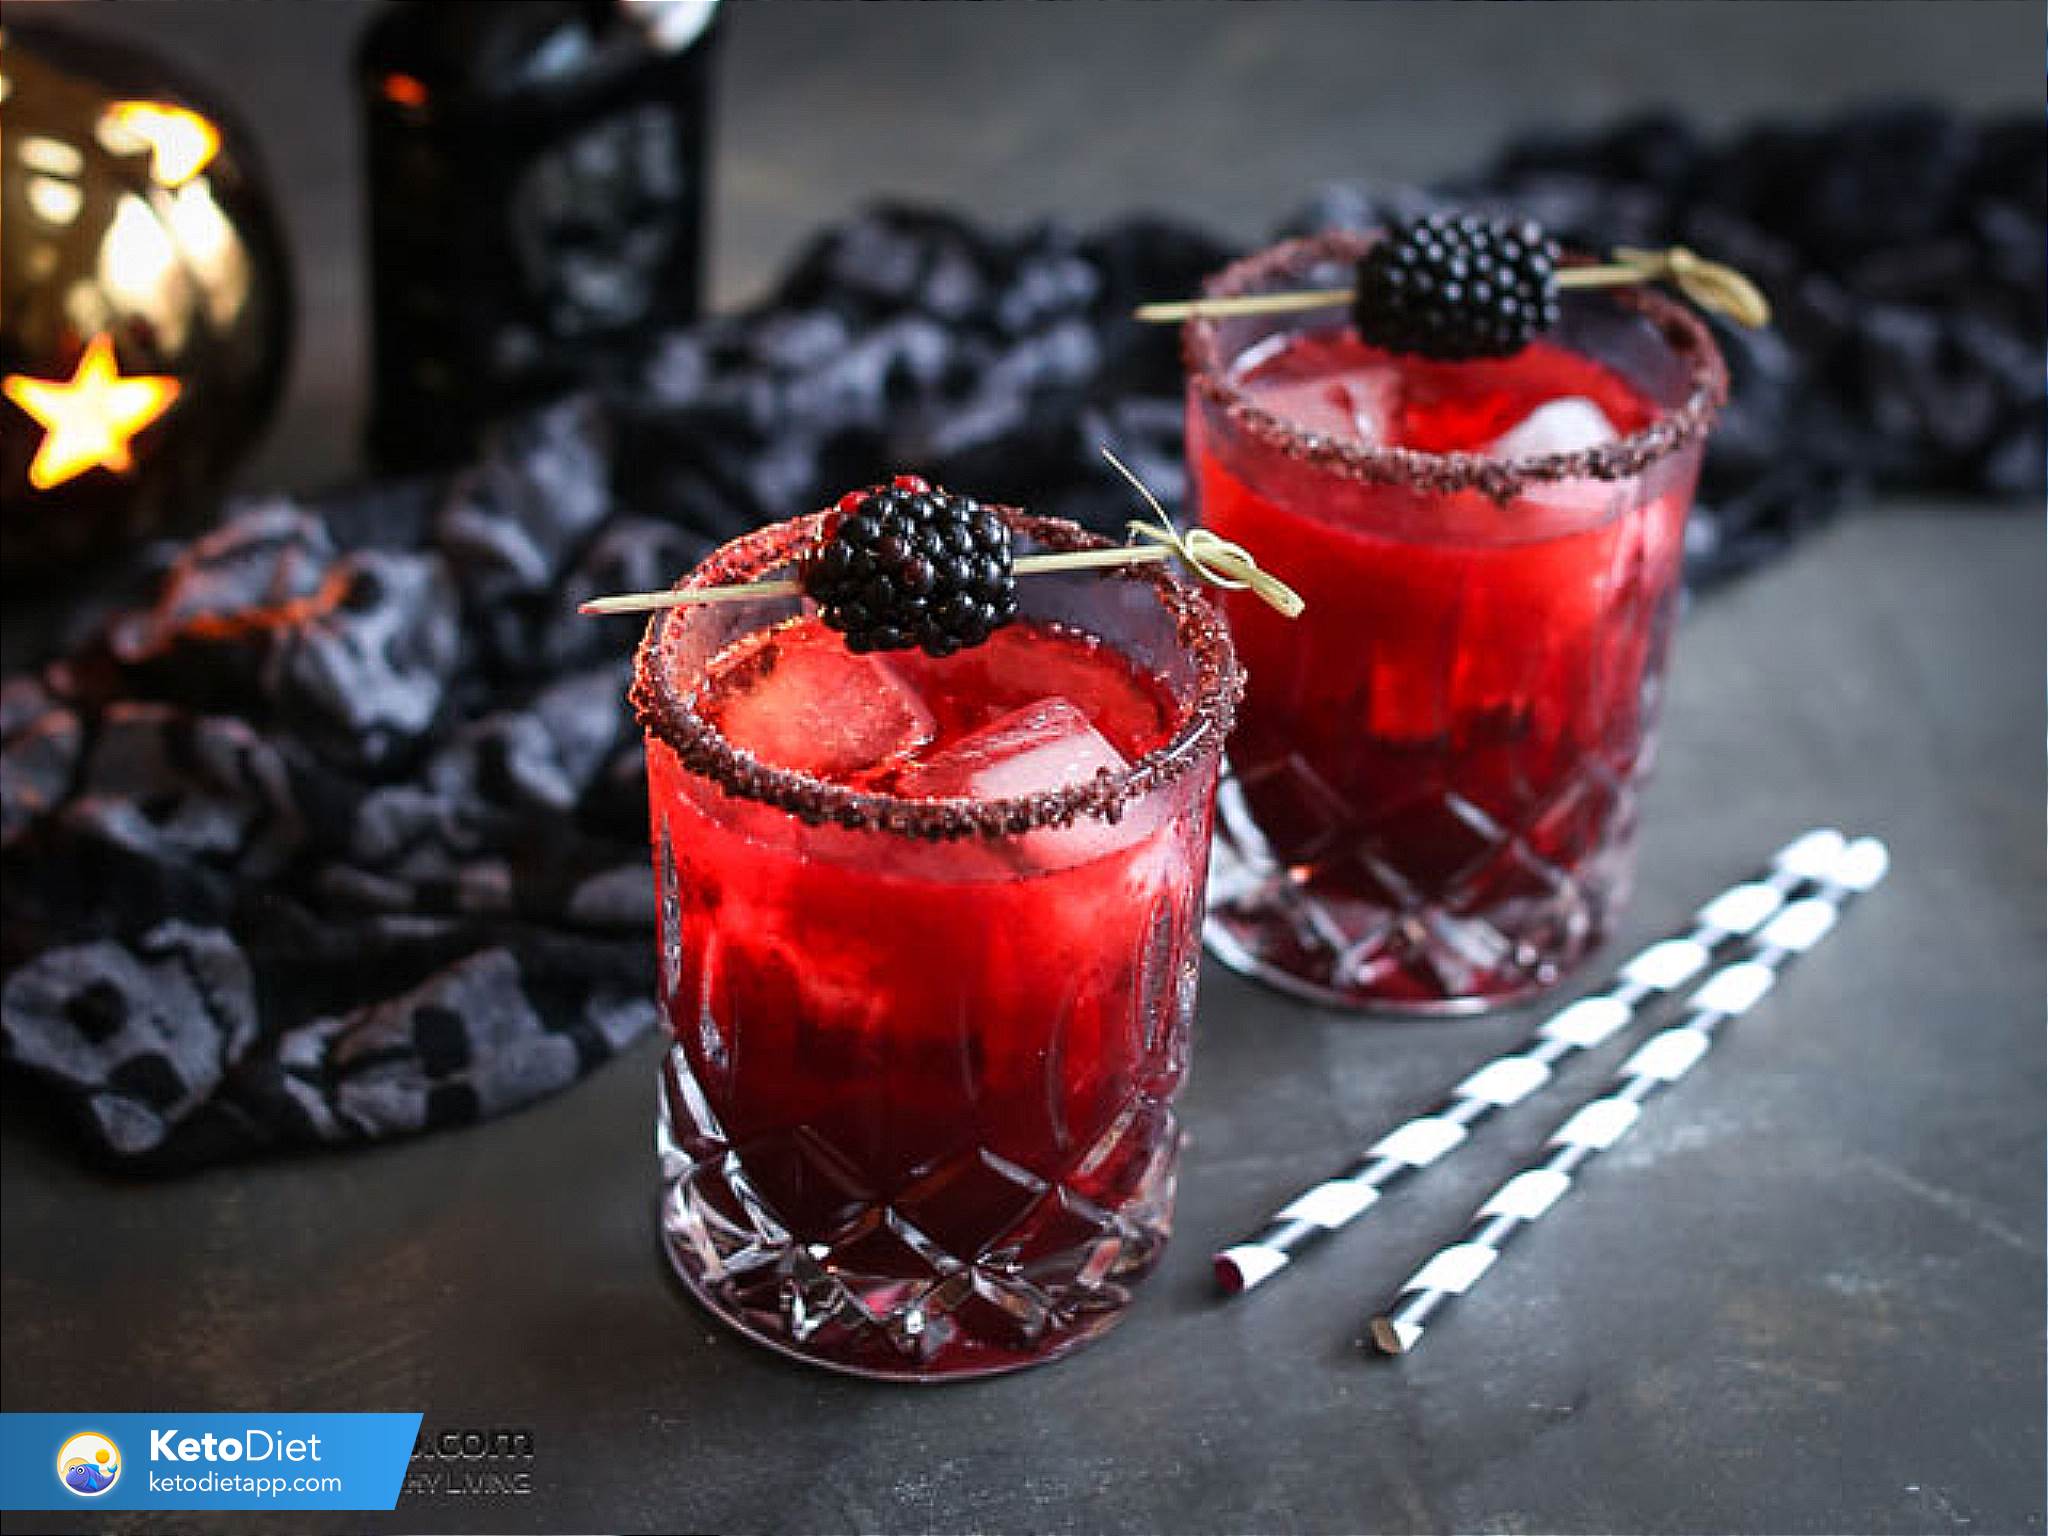 Low-Carb Black Widow Cocktail | KetoDiet Blog